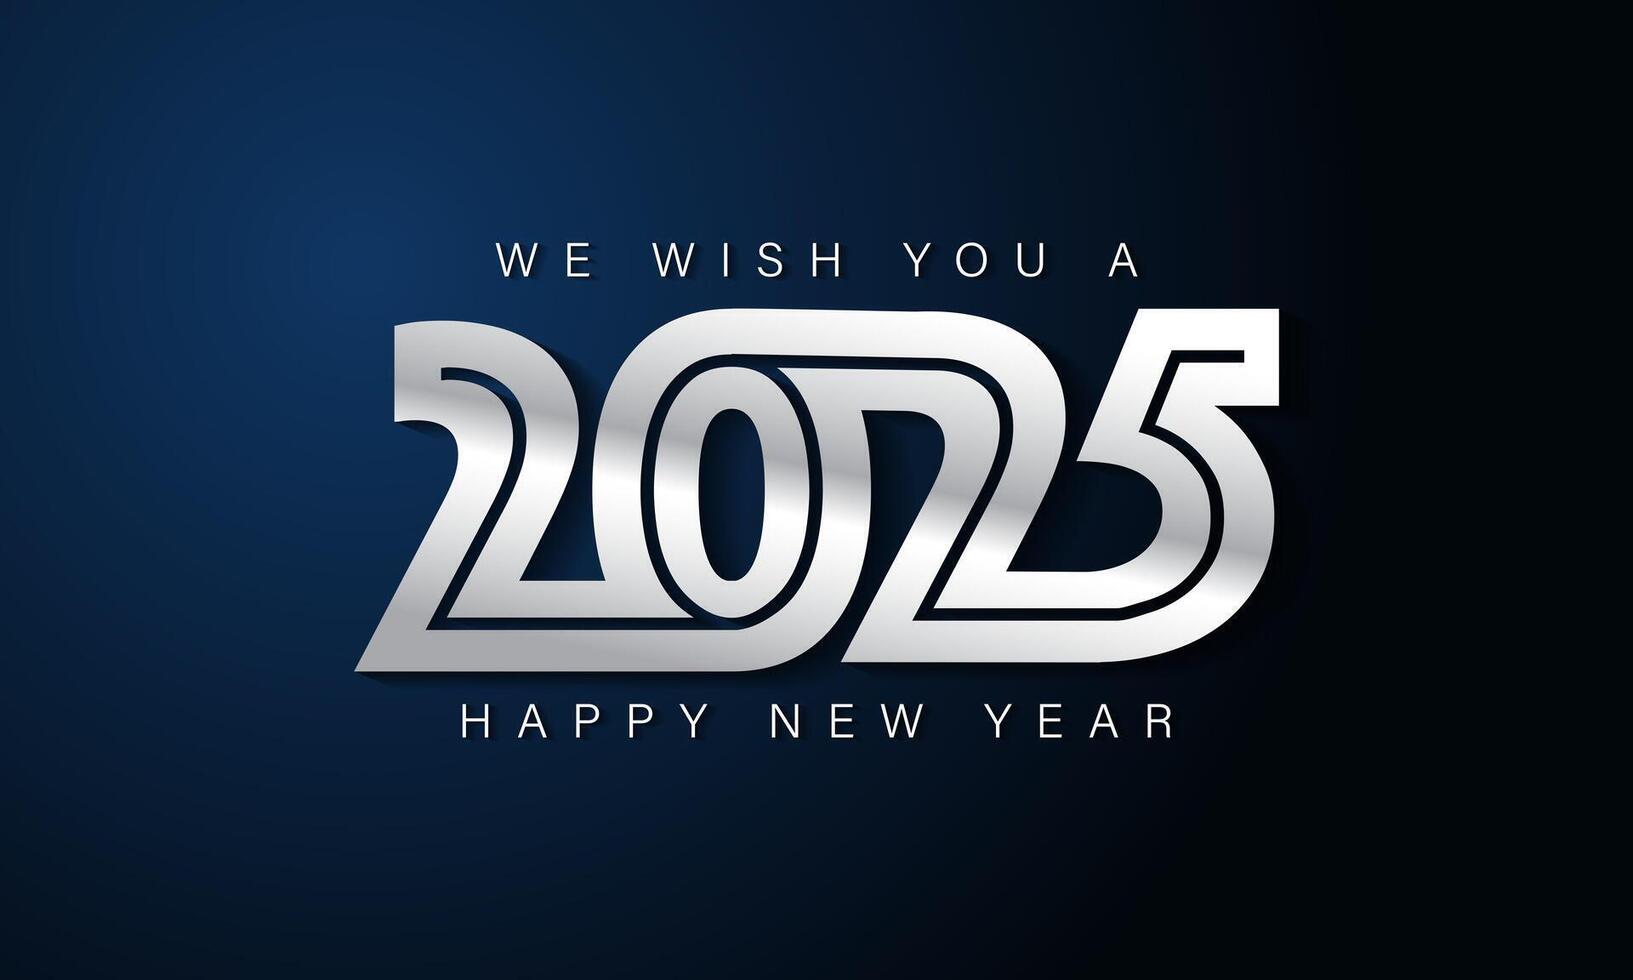 Happy New Year 2025 Text Design. vector